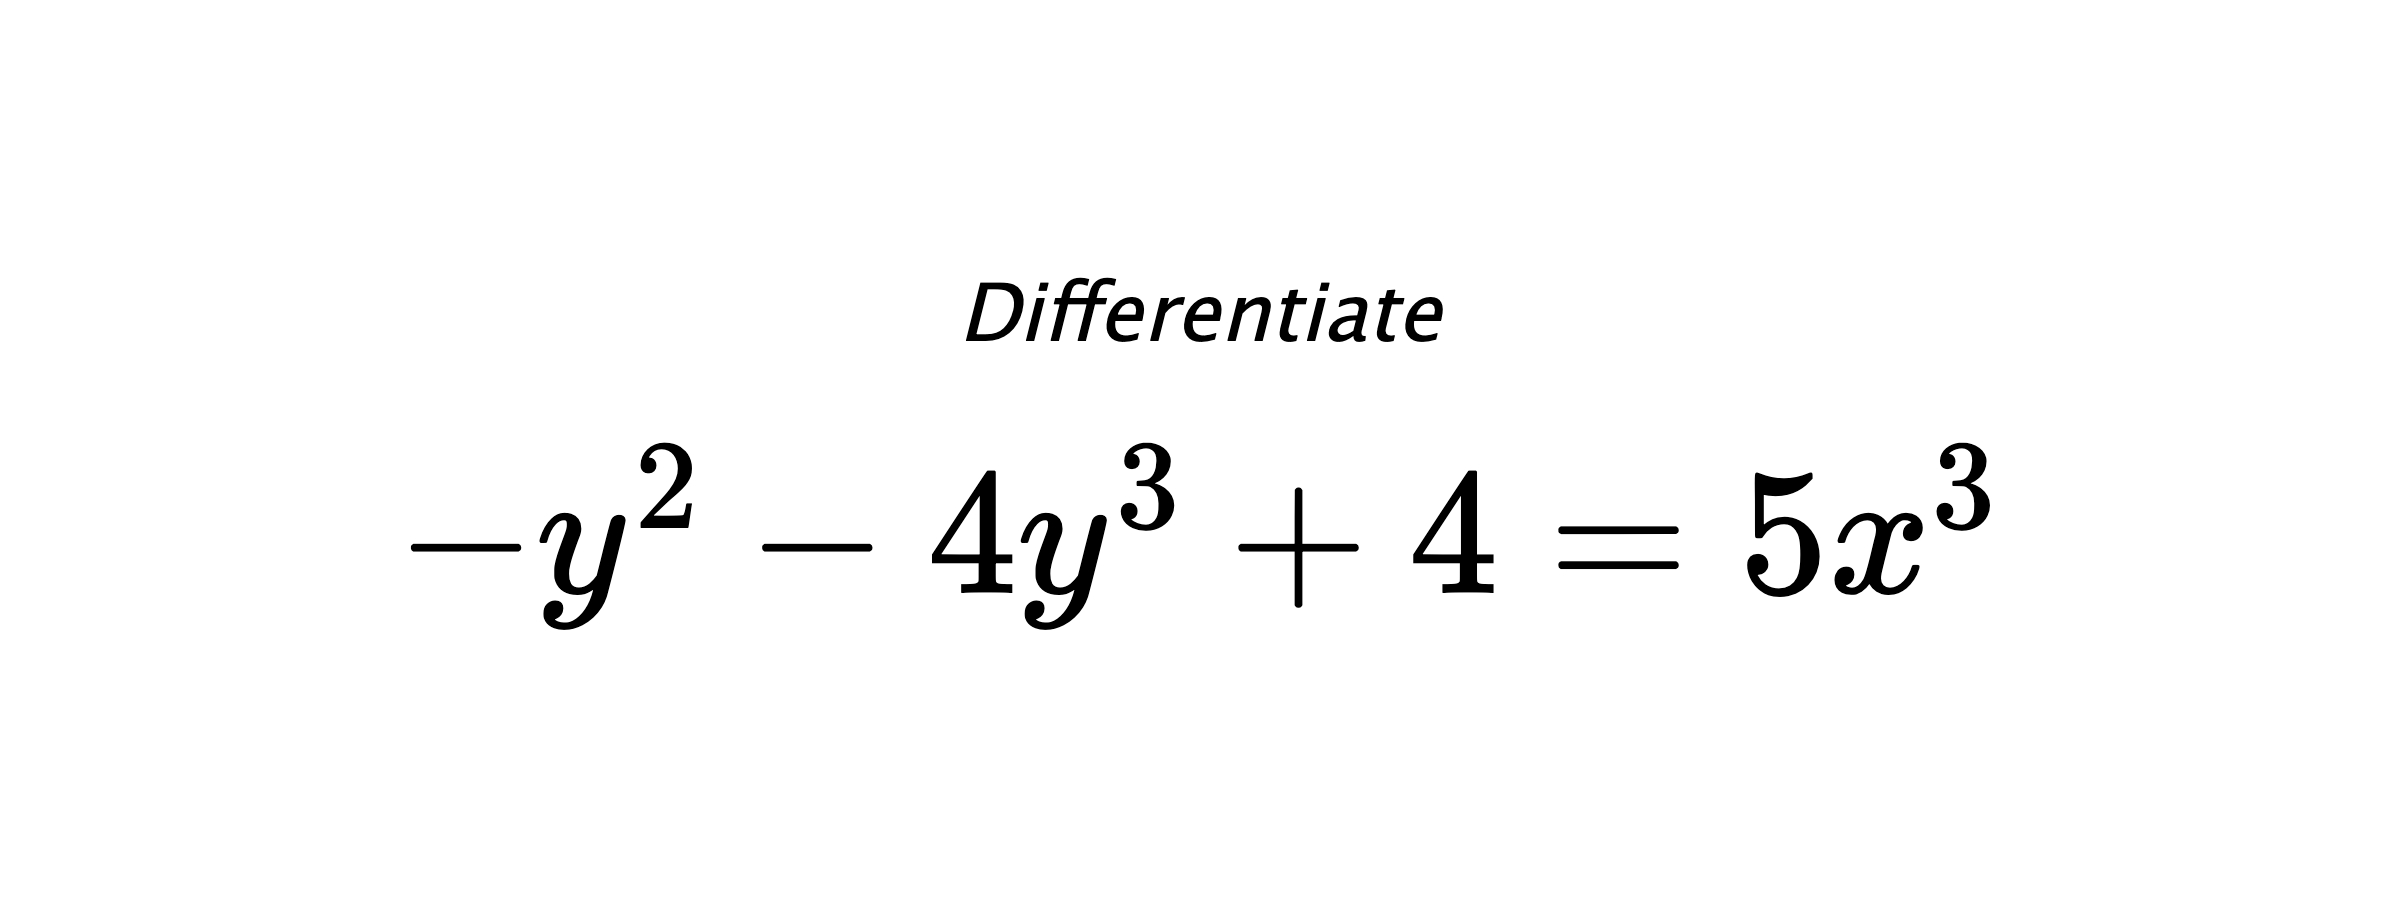 Differentiate $ -y^2-4y^3+4 = 5x^3 $